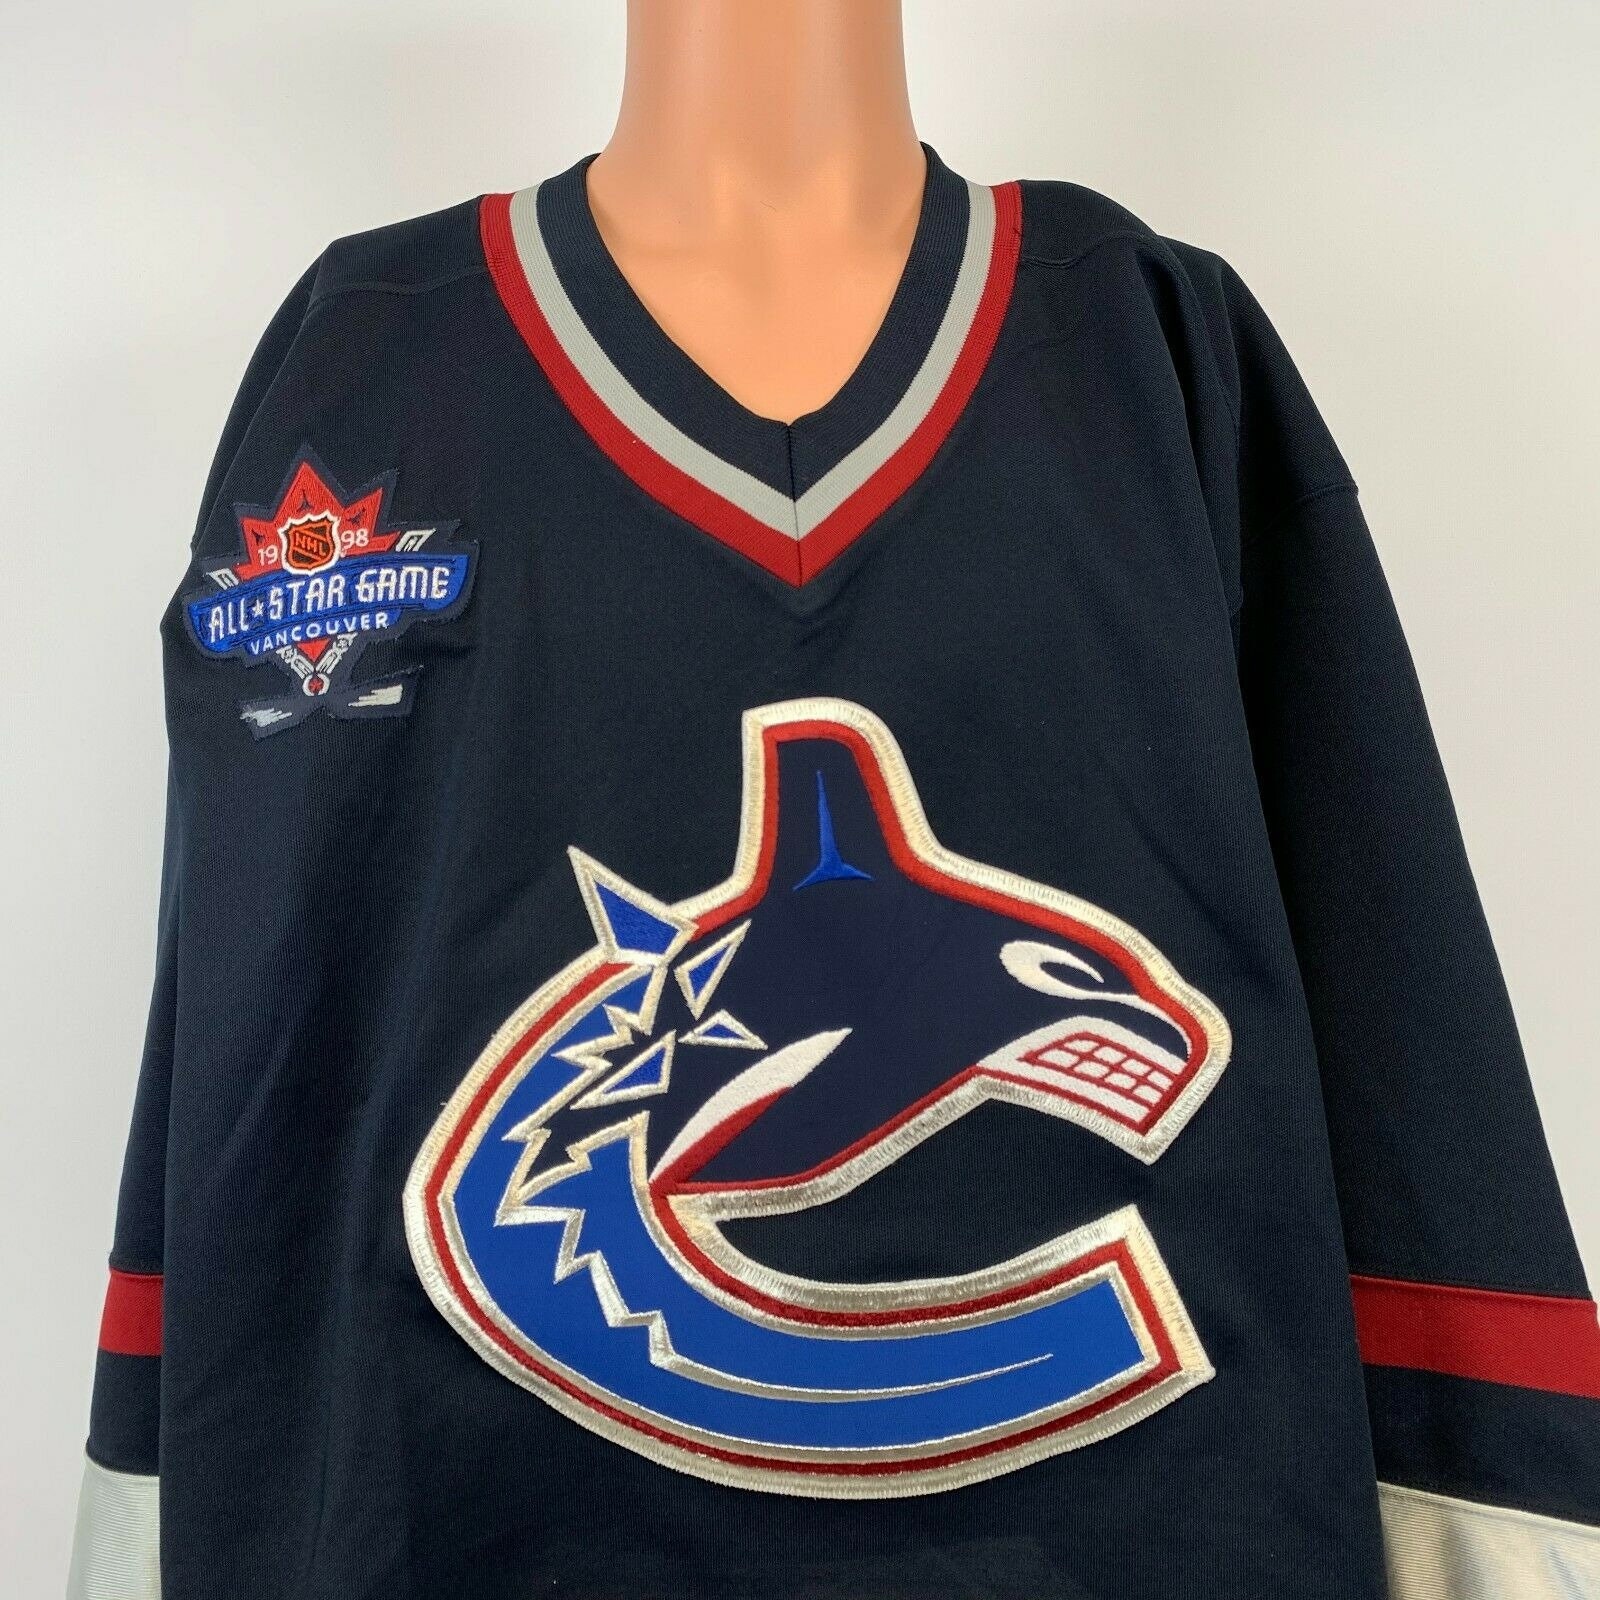 Vintage CCM 1998 NHL All Star Game Vancouver Canucks Hockey Jersey size 48